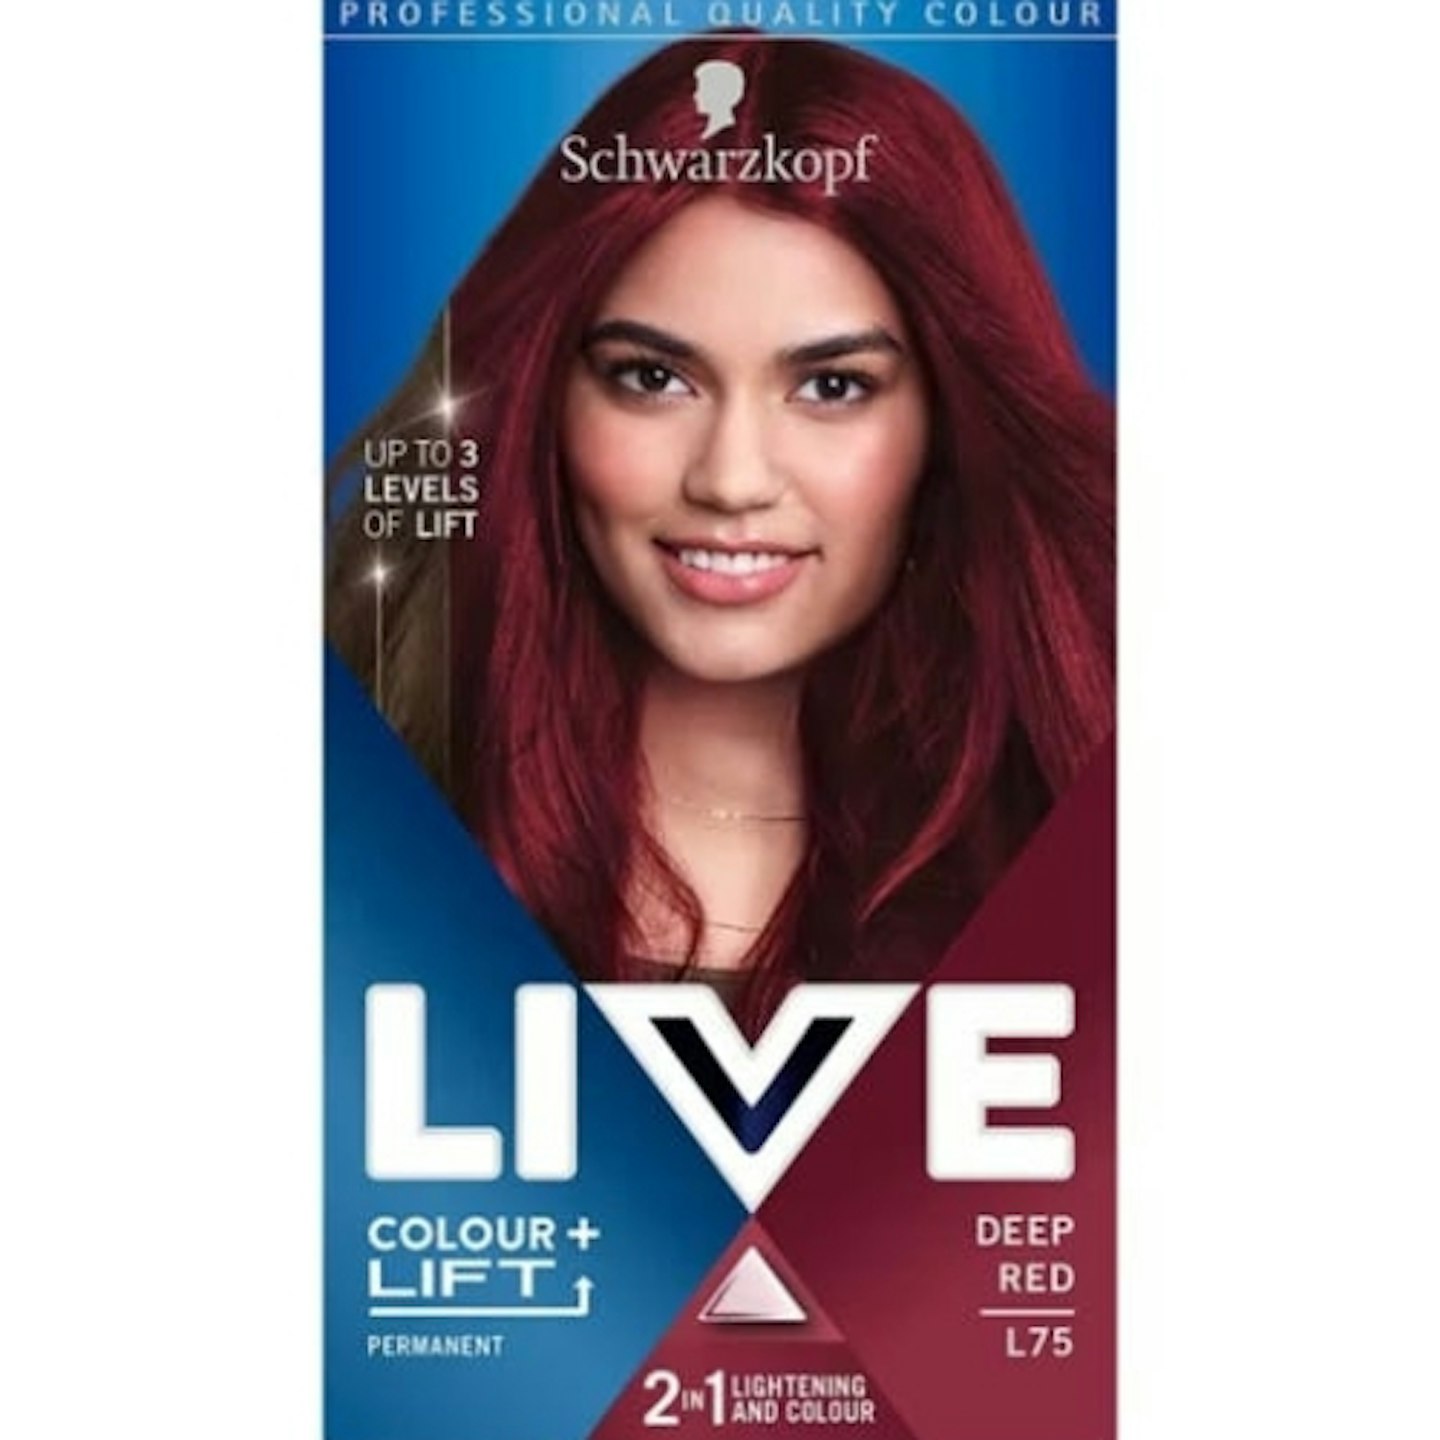 Schwarzkopf LIVE Colour + Lift, Long-Lasting Permanent Hair Dye